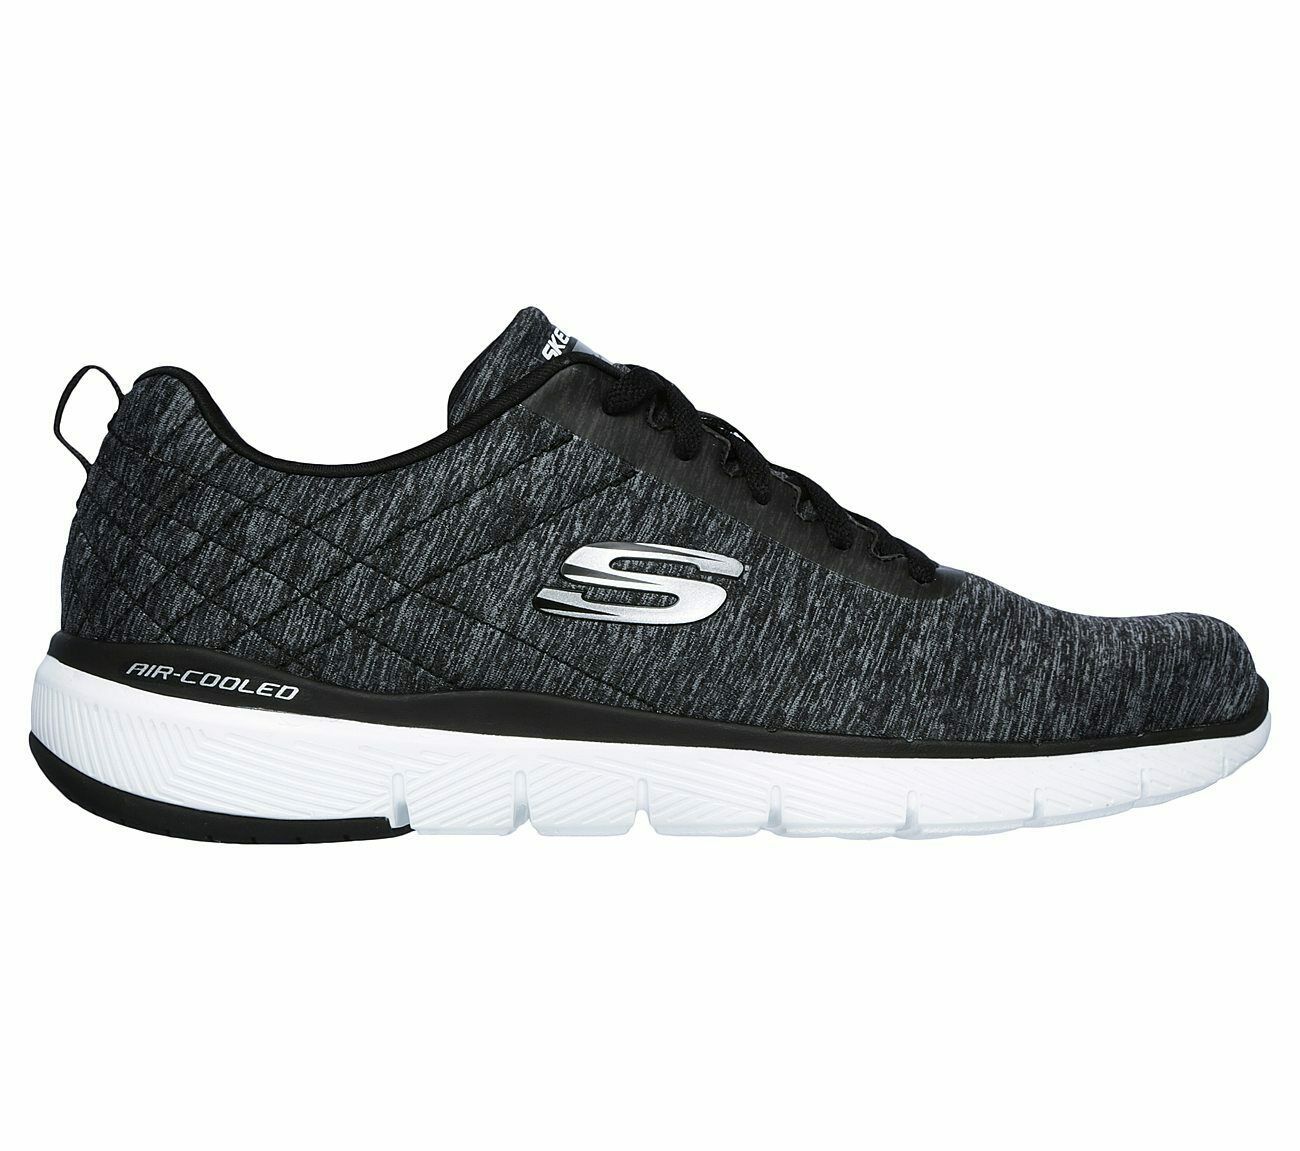 Skechers Black shoes Men's Memory Foam Sporty Comfort Casual Athletic ...